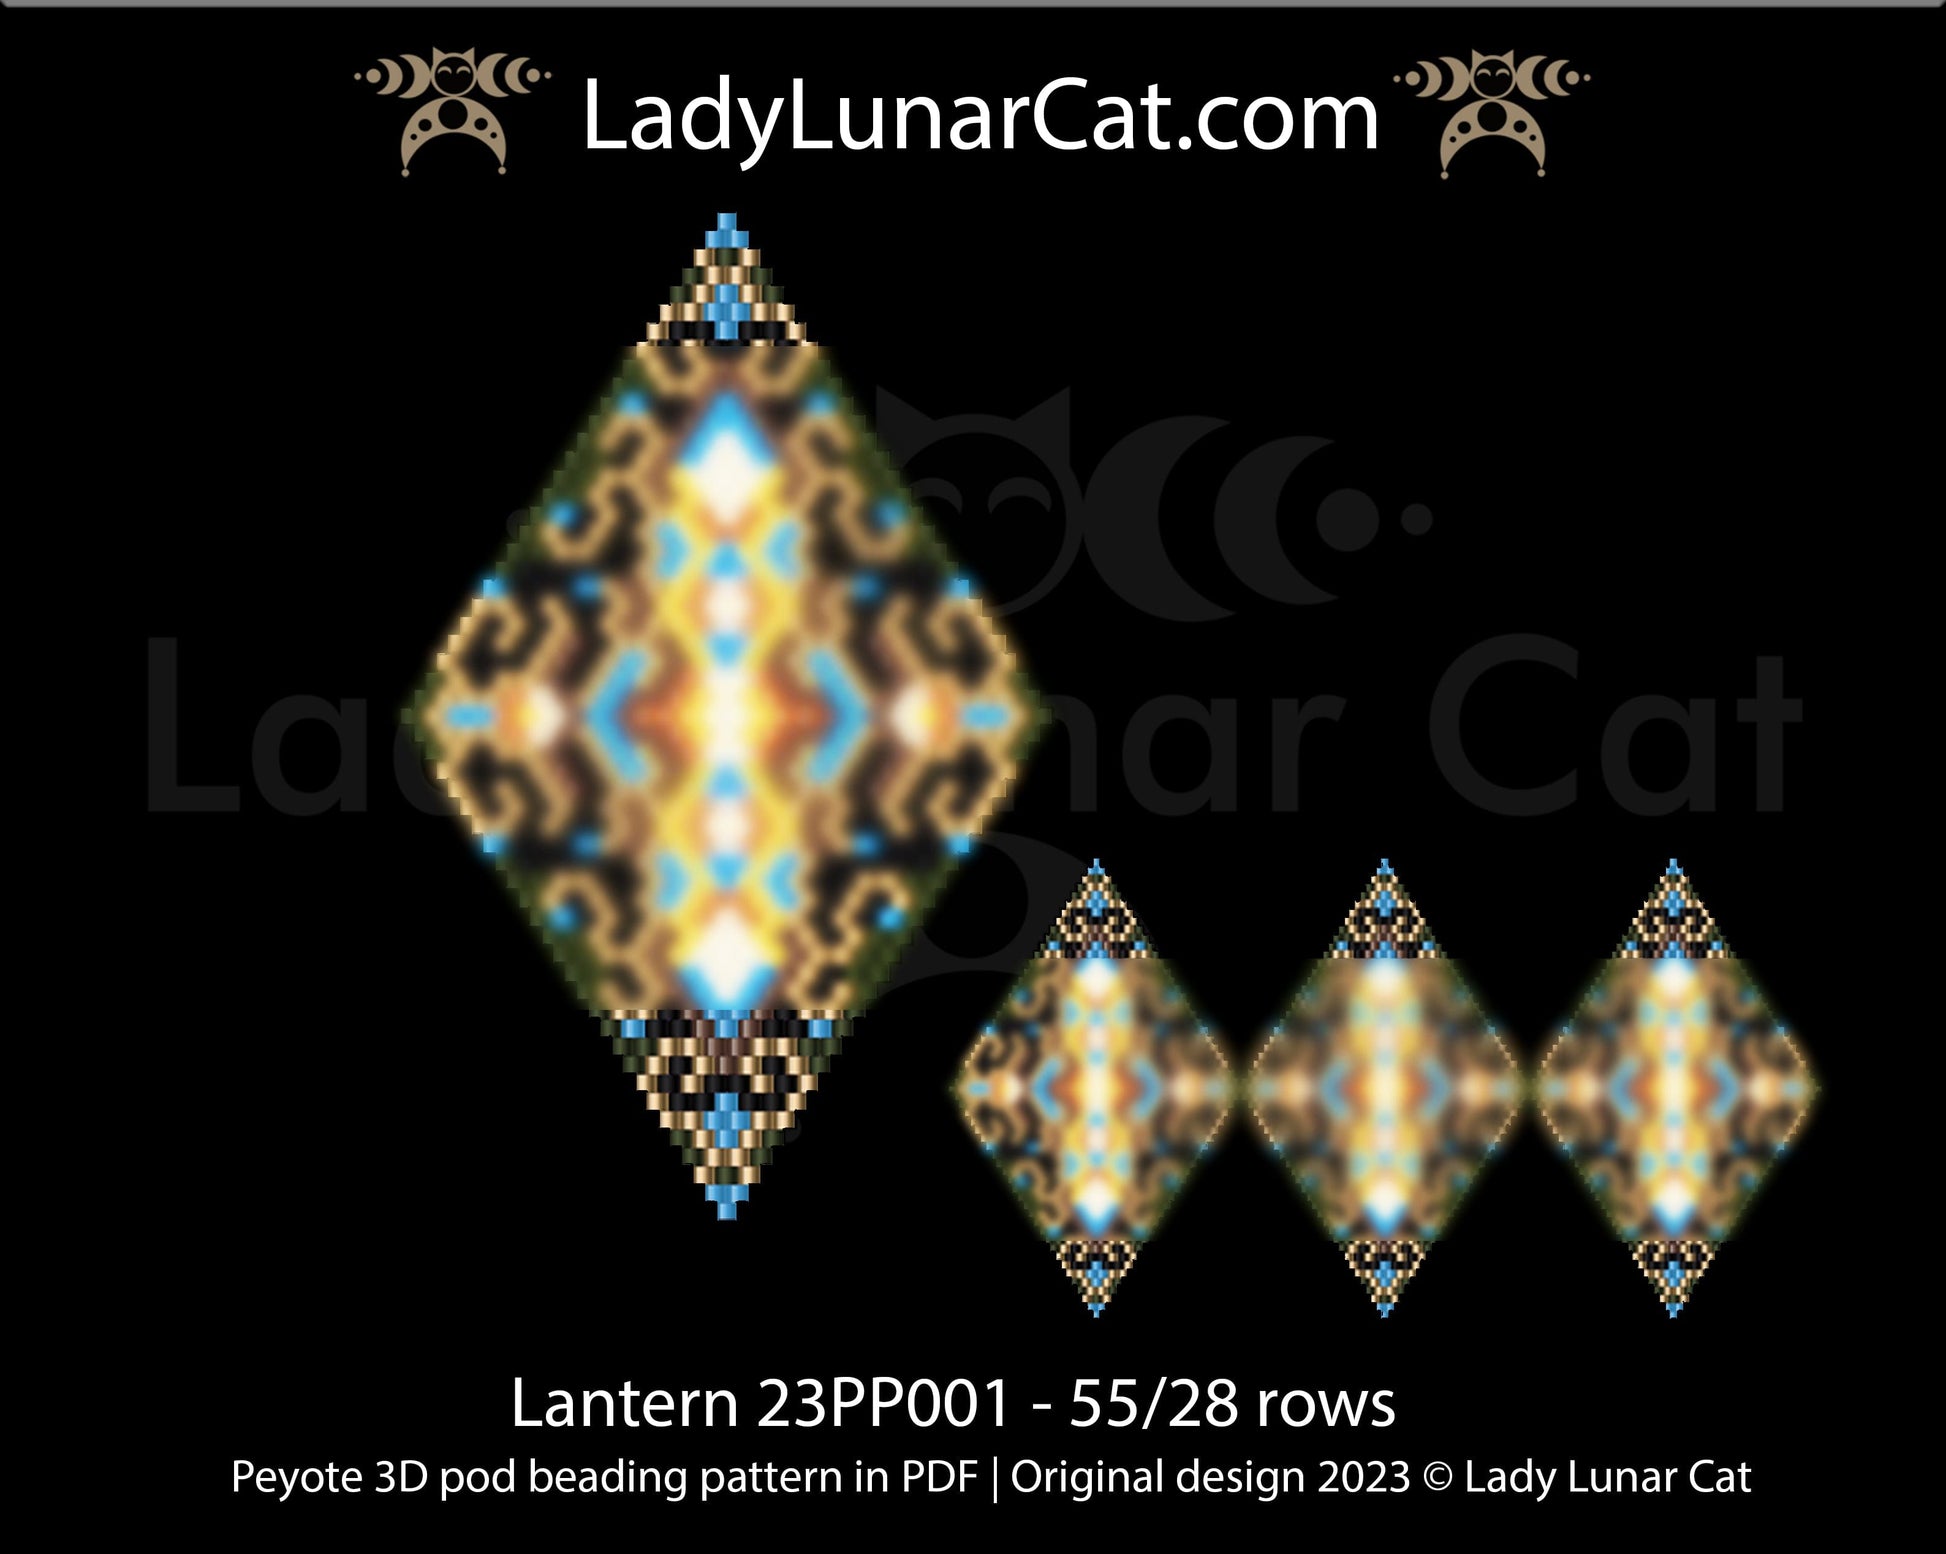 Copy of Peyote pod pattern or crystalpod pattern for beading Lantern 23PCP008 LadyLunarCat